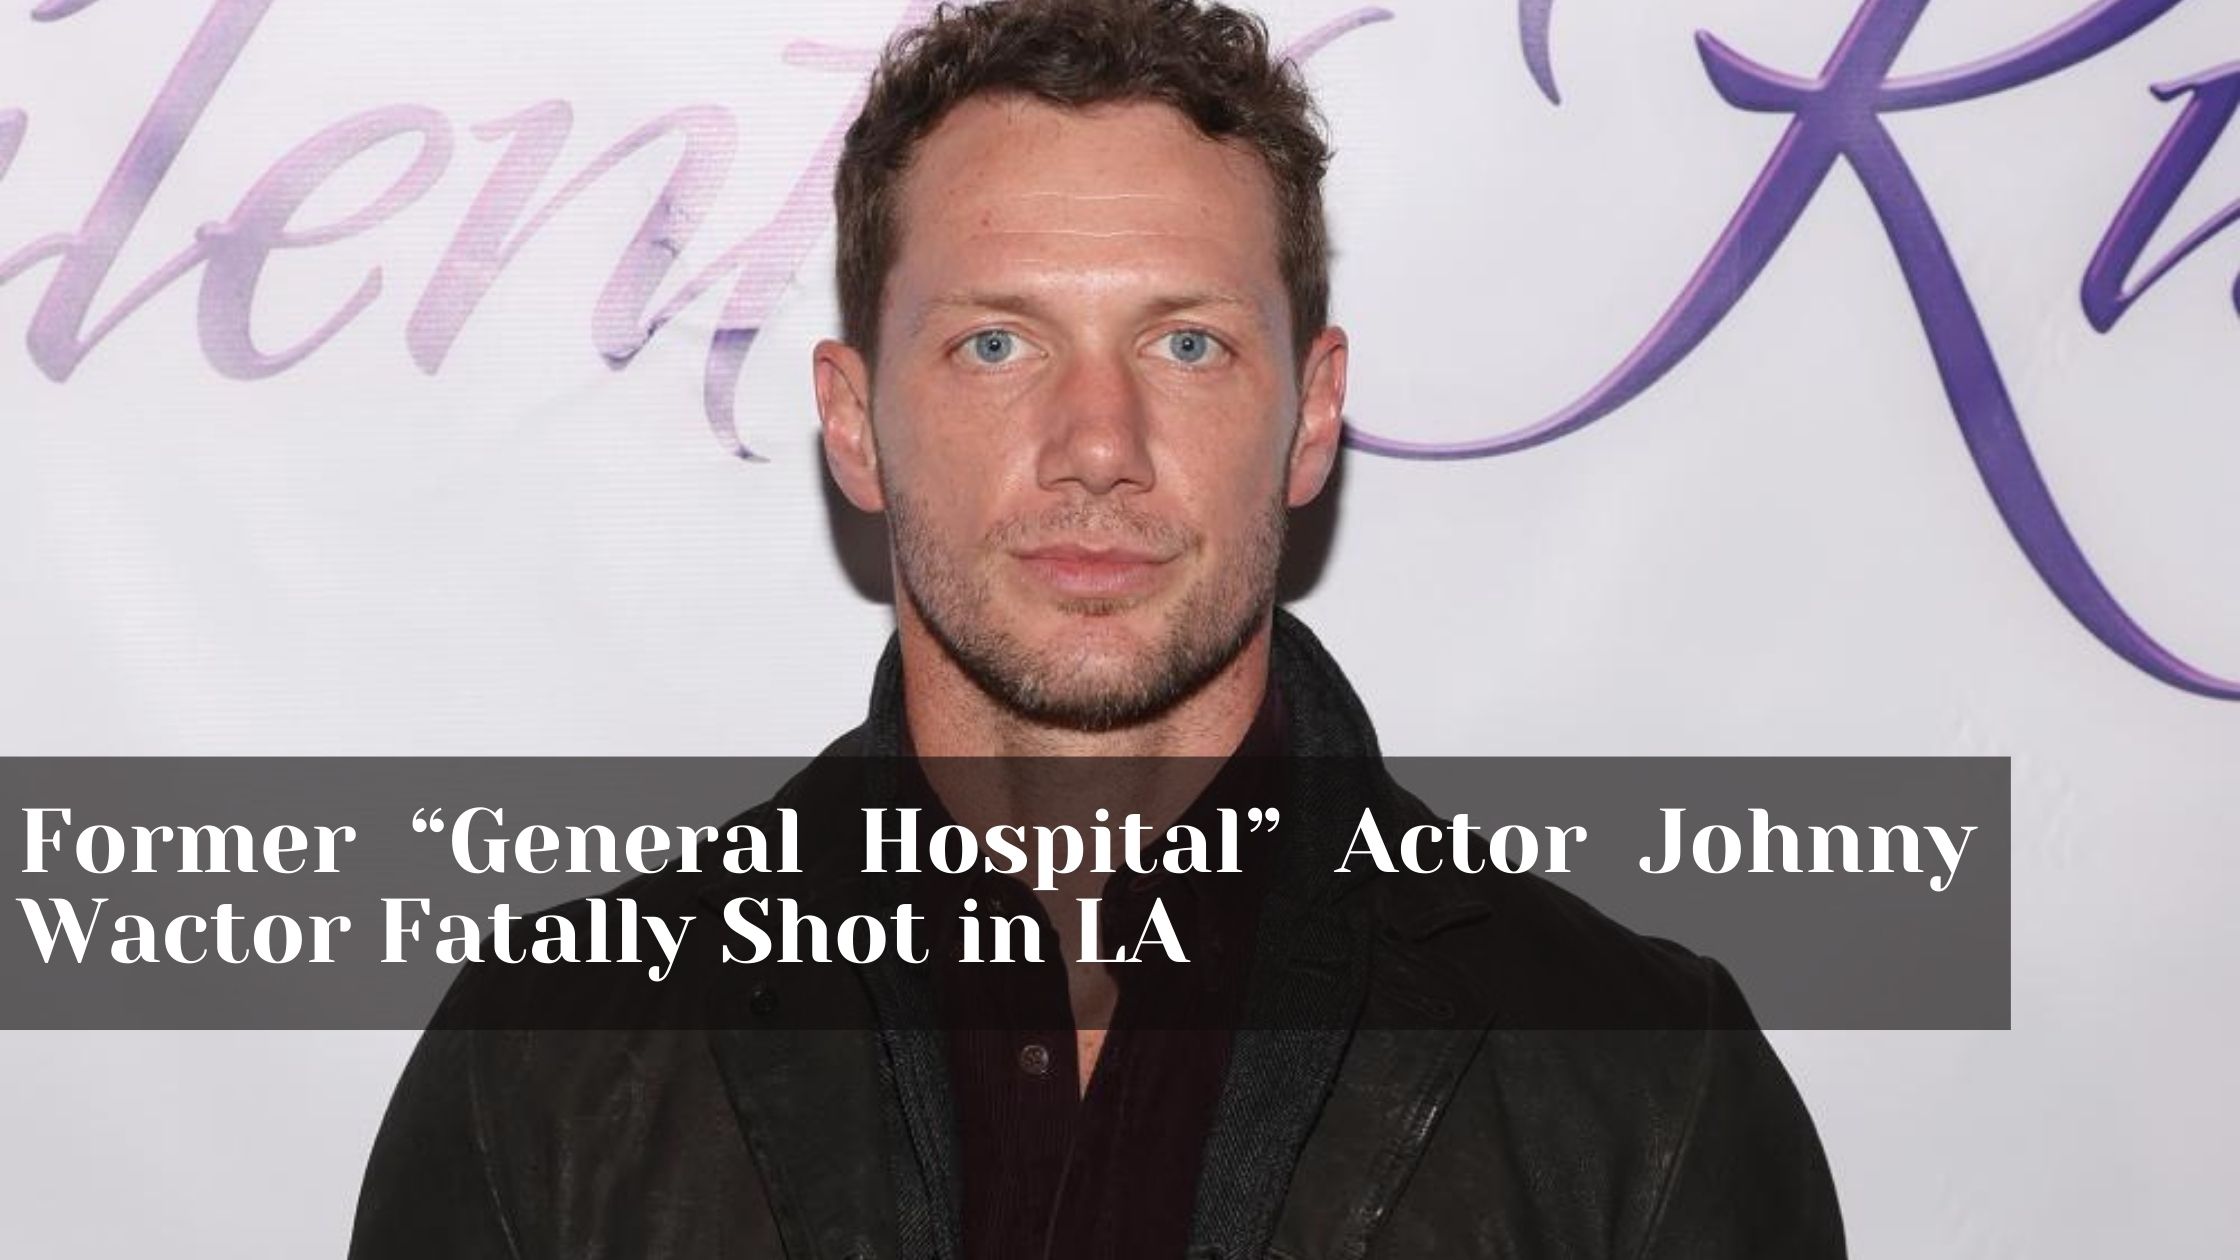 Former “General Hospital” Actor Johnny Wactor Fatally Shot in LA